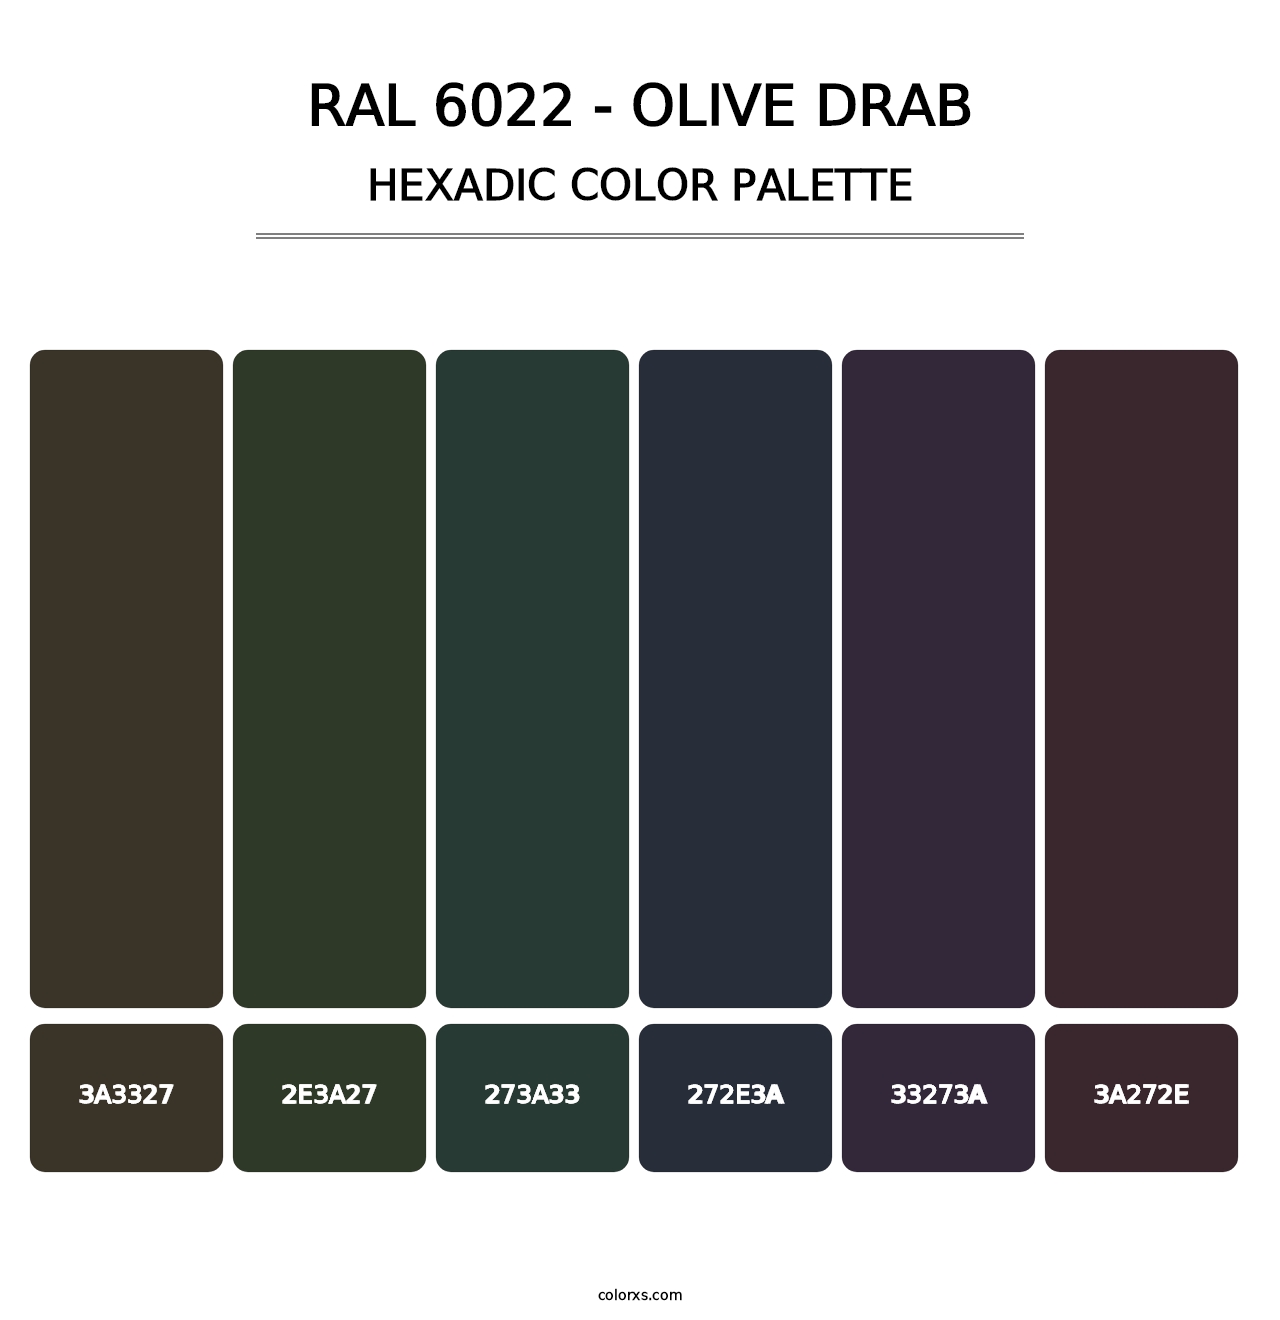 RAL 6022 - Olive Drab - Hexadic Color Palette